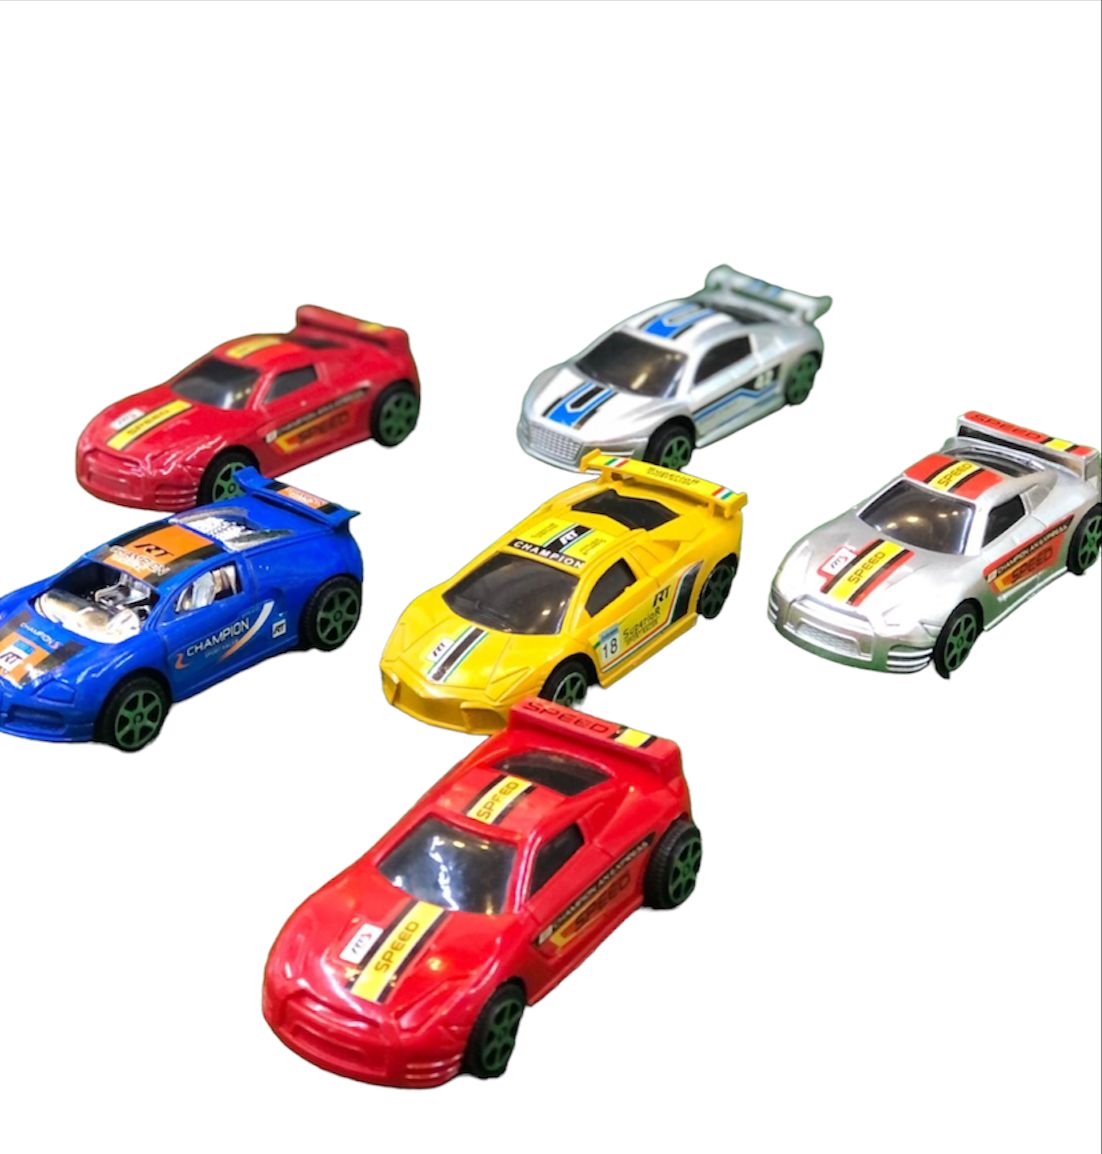 Set x6 carros de juguete para coleccion 